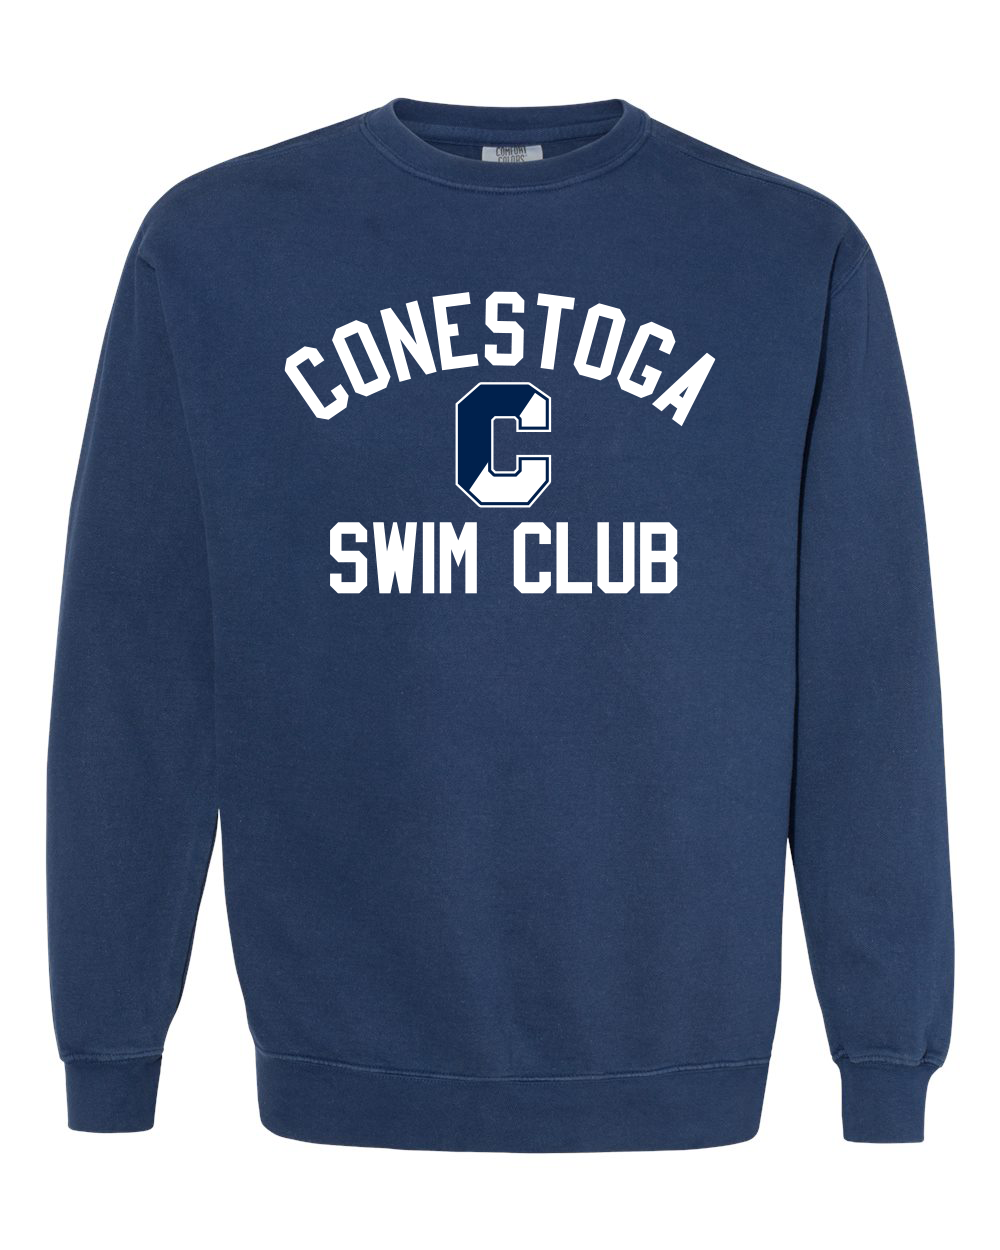 Conestoga Swim Club Crewneck Sweatshirt